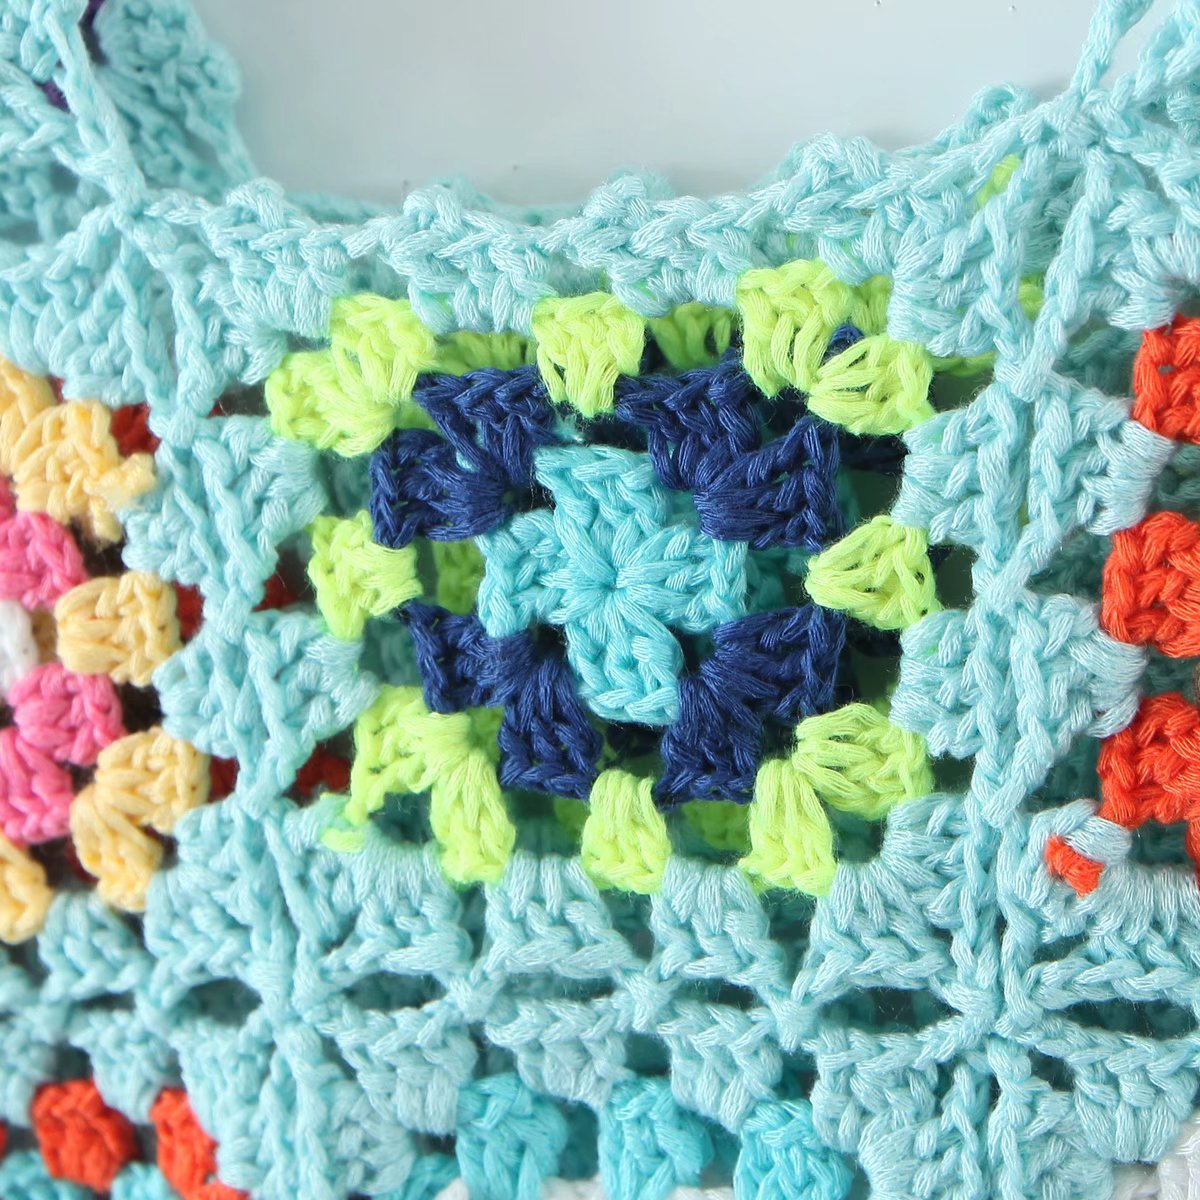 Boho Square Crochet Knit Dress